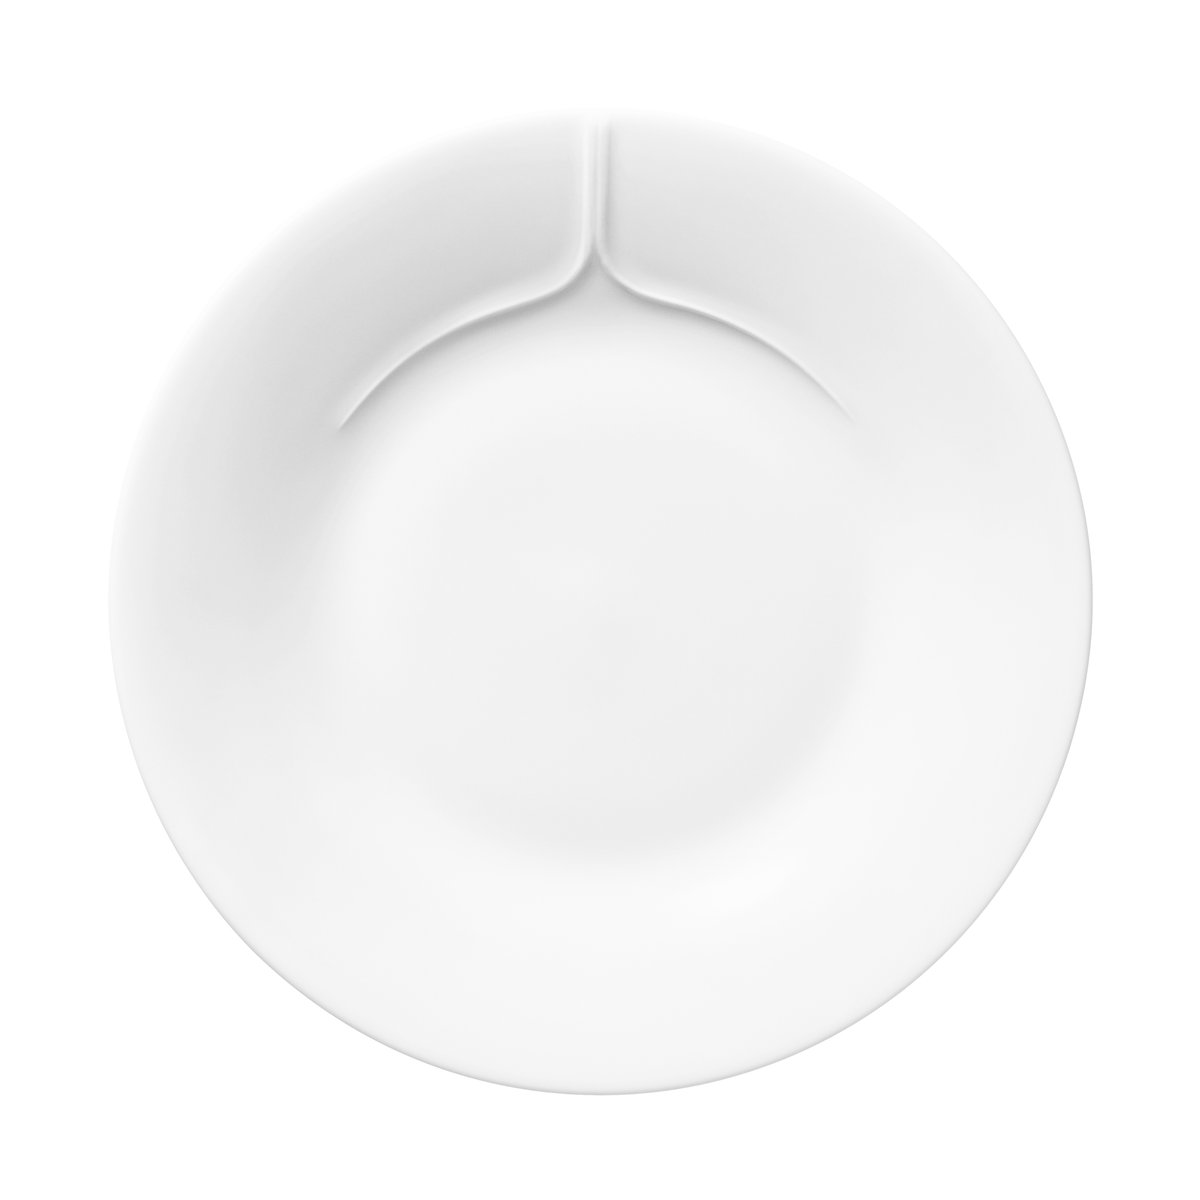 rörstrand petite assiette pli blanc 17 cm blanc